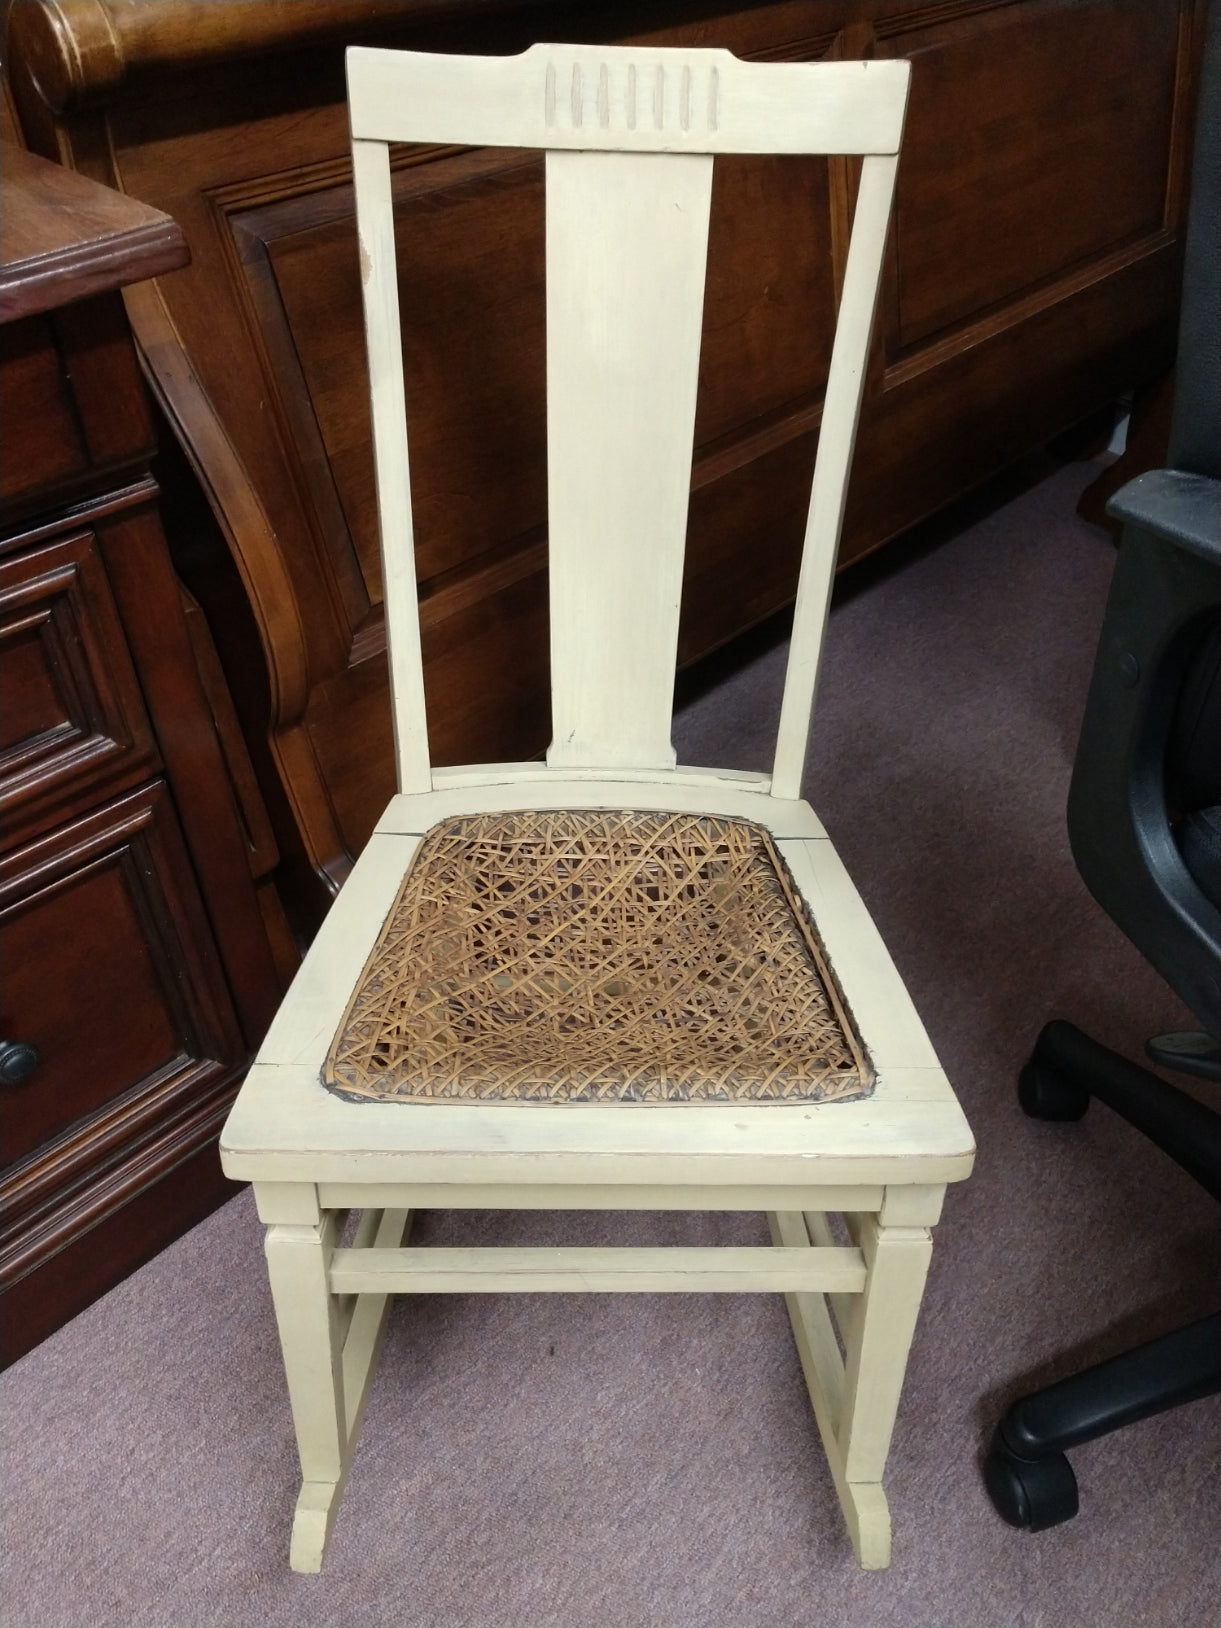 Vintage Cane Seat Rocking Chair